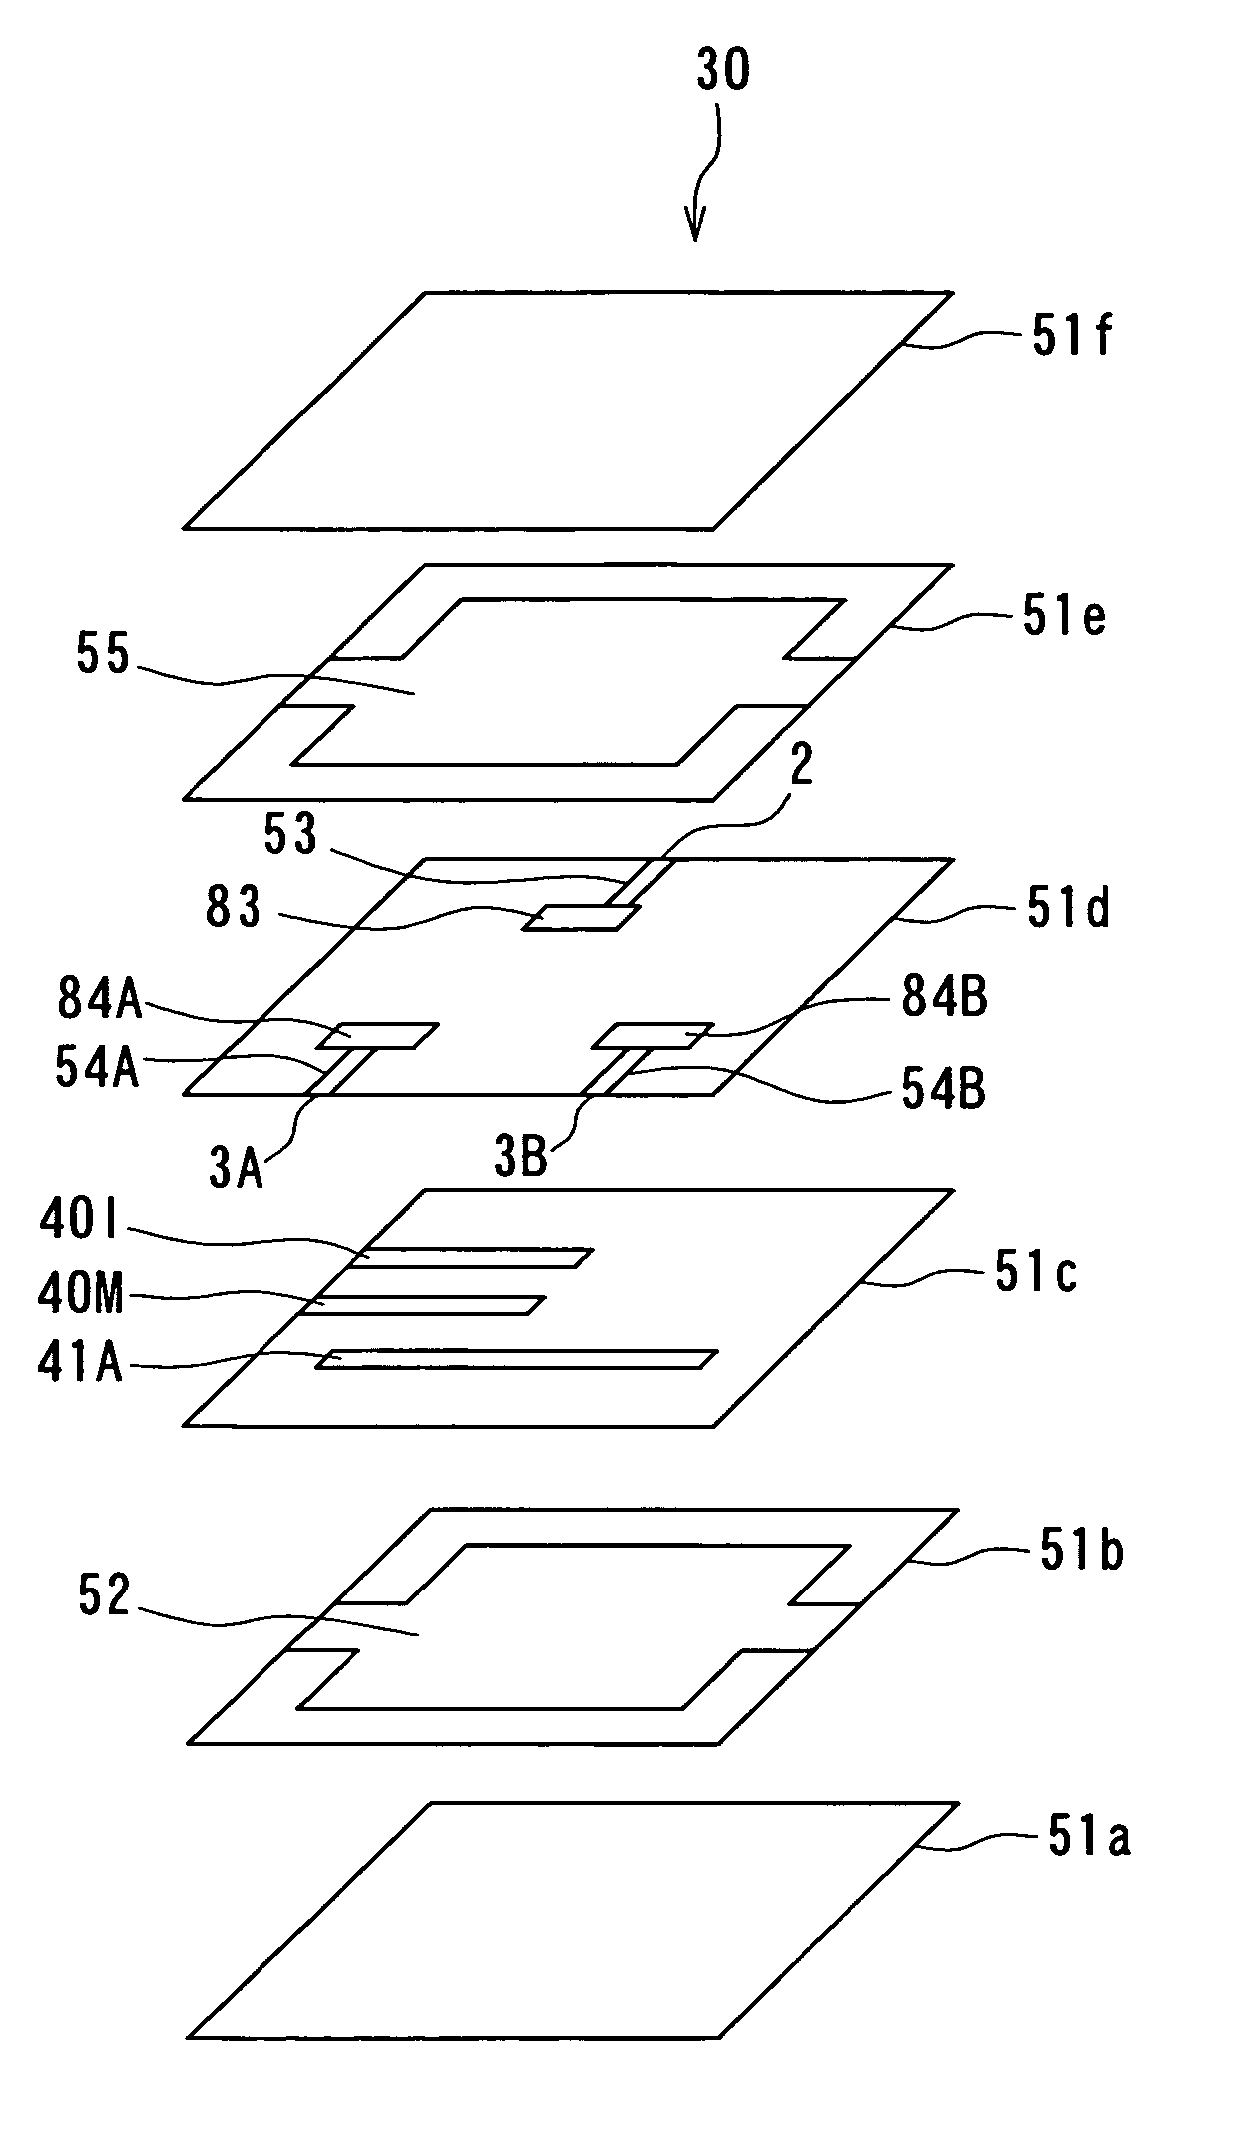 Multi-layer band-pass filter